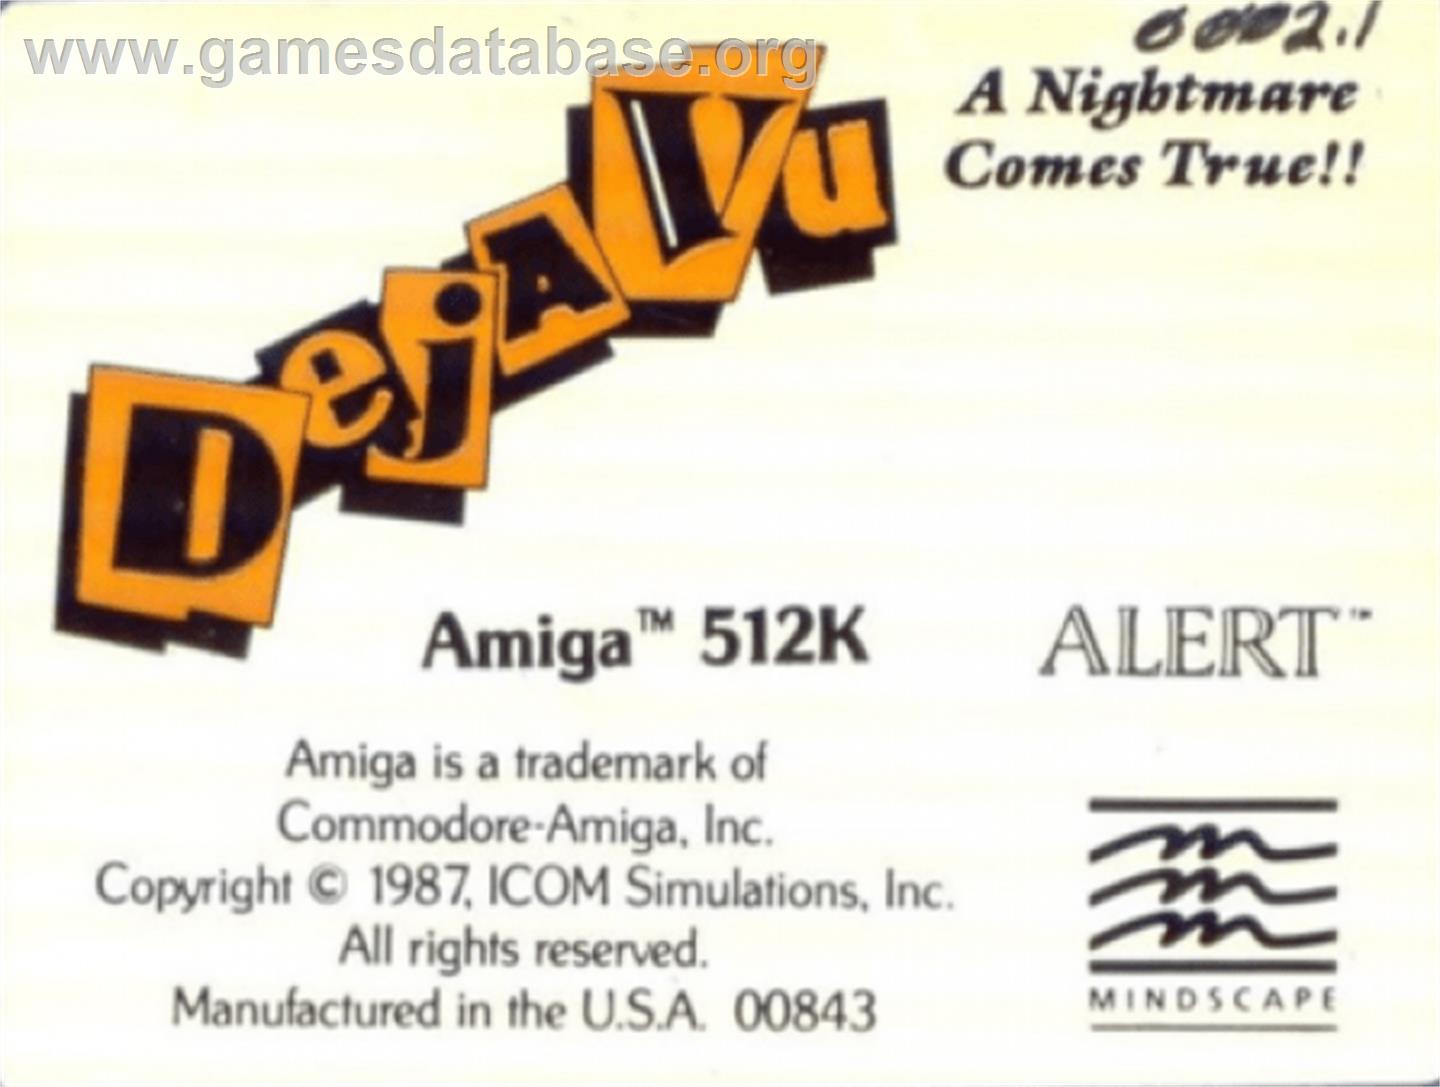 Deja Vu: A Nightmare Comes True - Commodore Amiga - Artwork - Cartridge Top